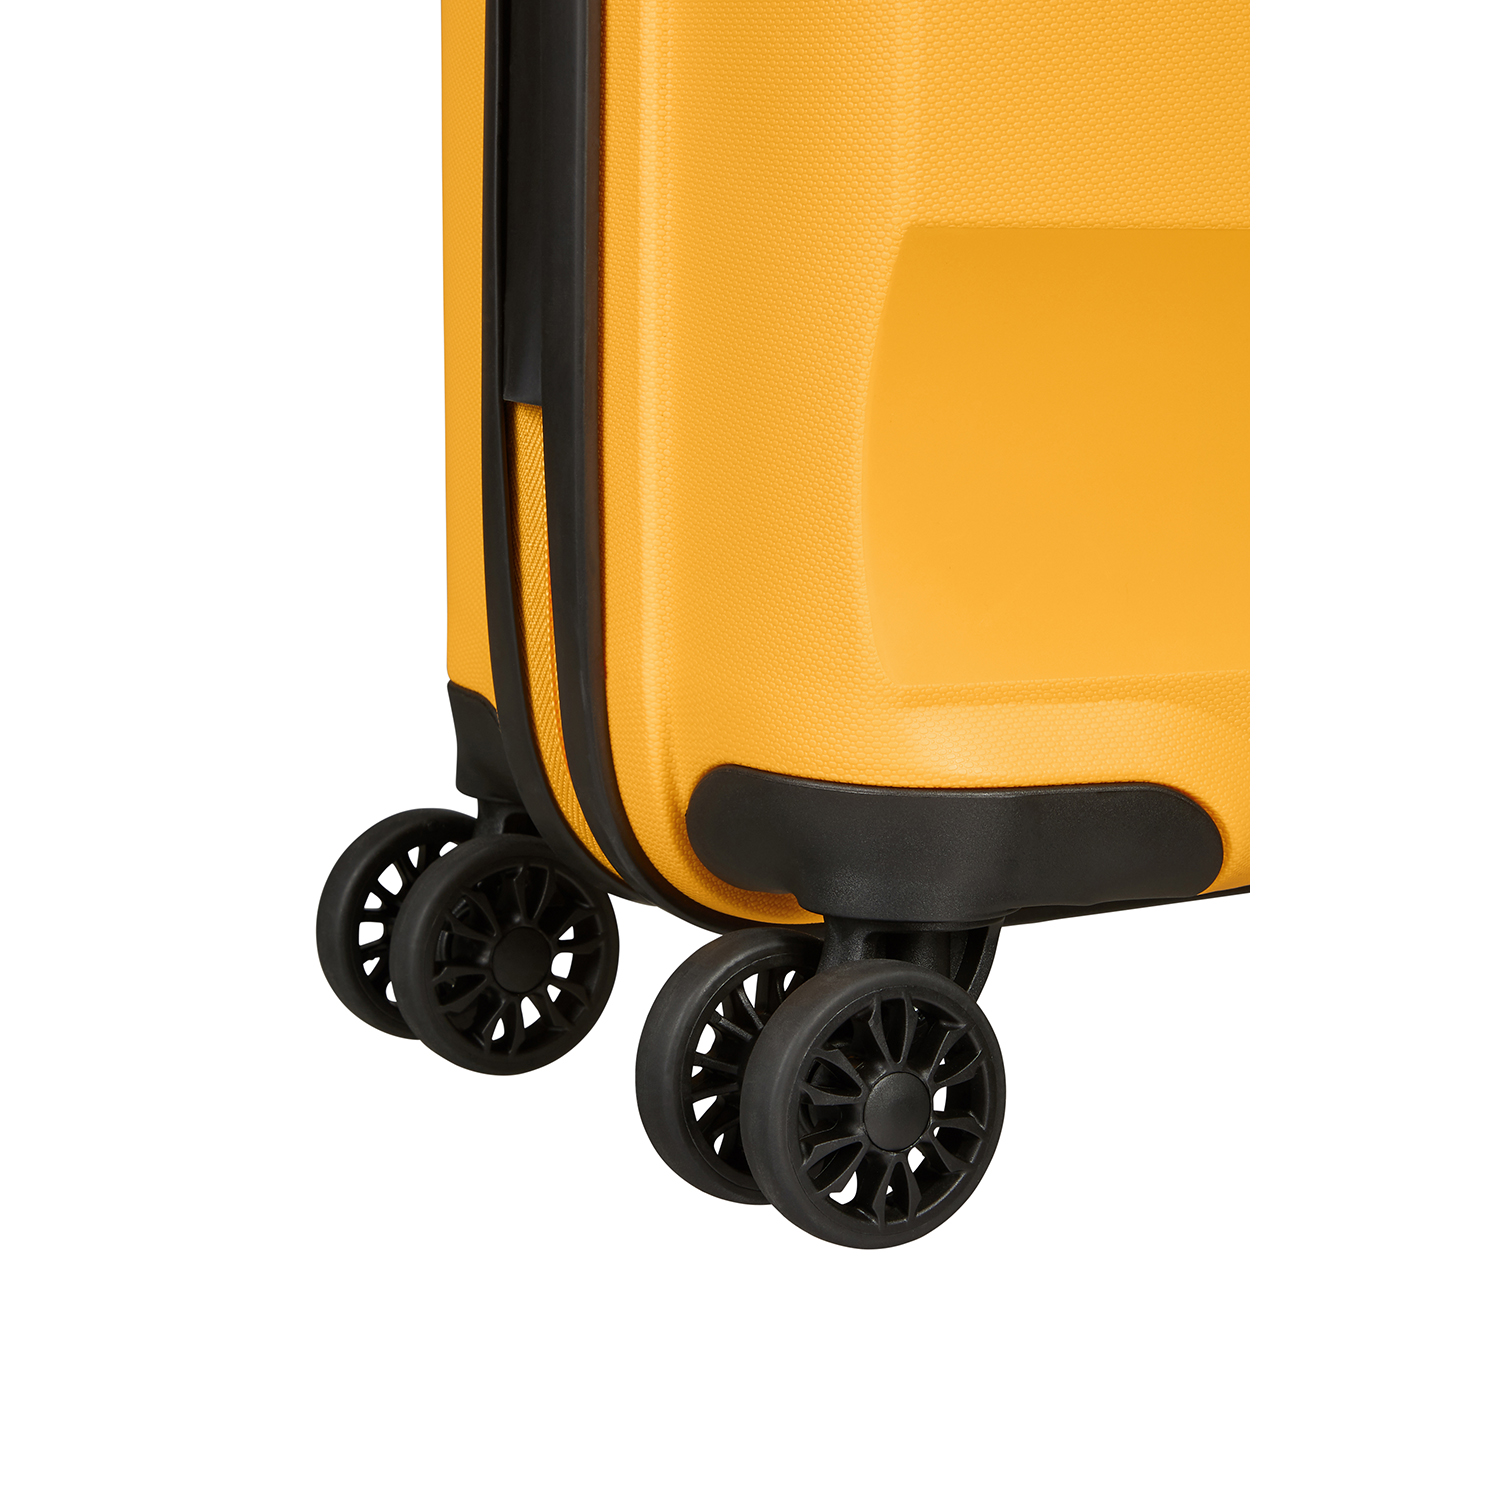 BON AIR DLX- Spinner 4 Tekerlekli Kabin Boy Valiz 55 cm SMB2-001-SF000*26